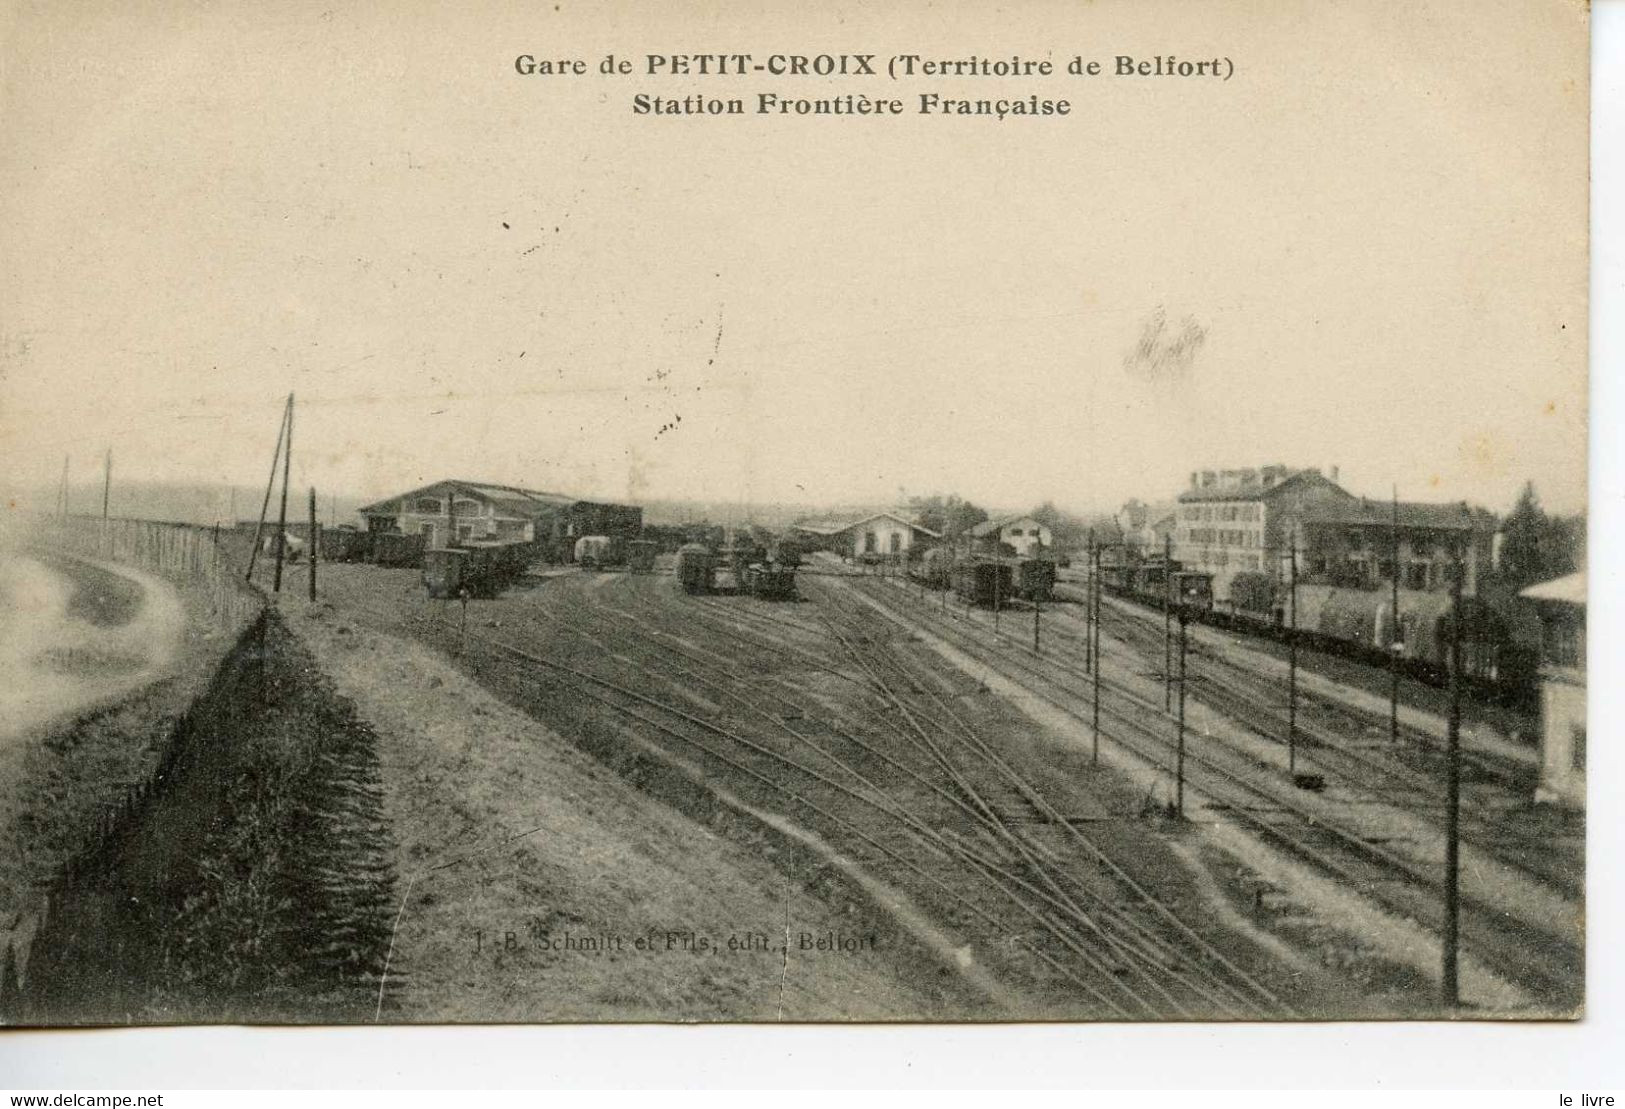 CPA 90 PETITE-CROIX. STATION FRONTIERE FRANCAISE 1916